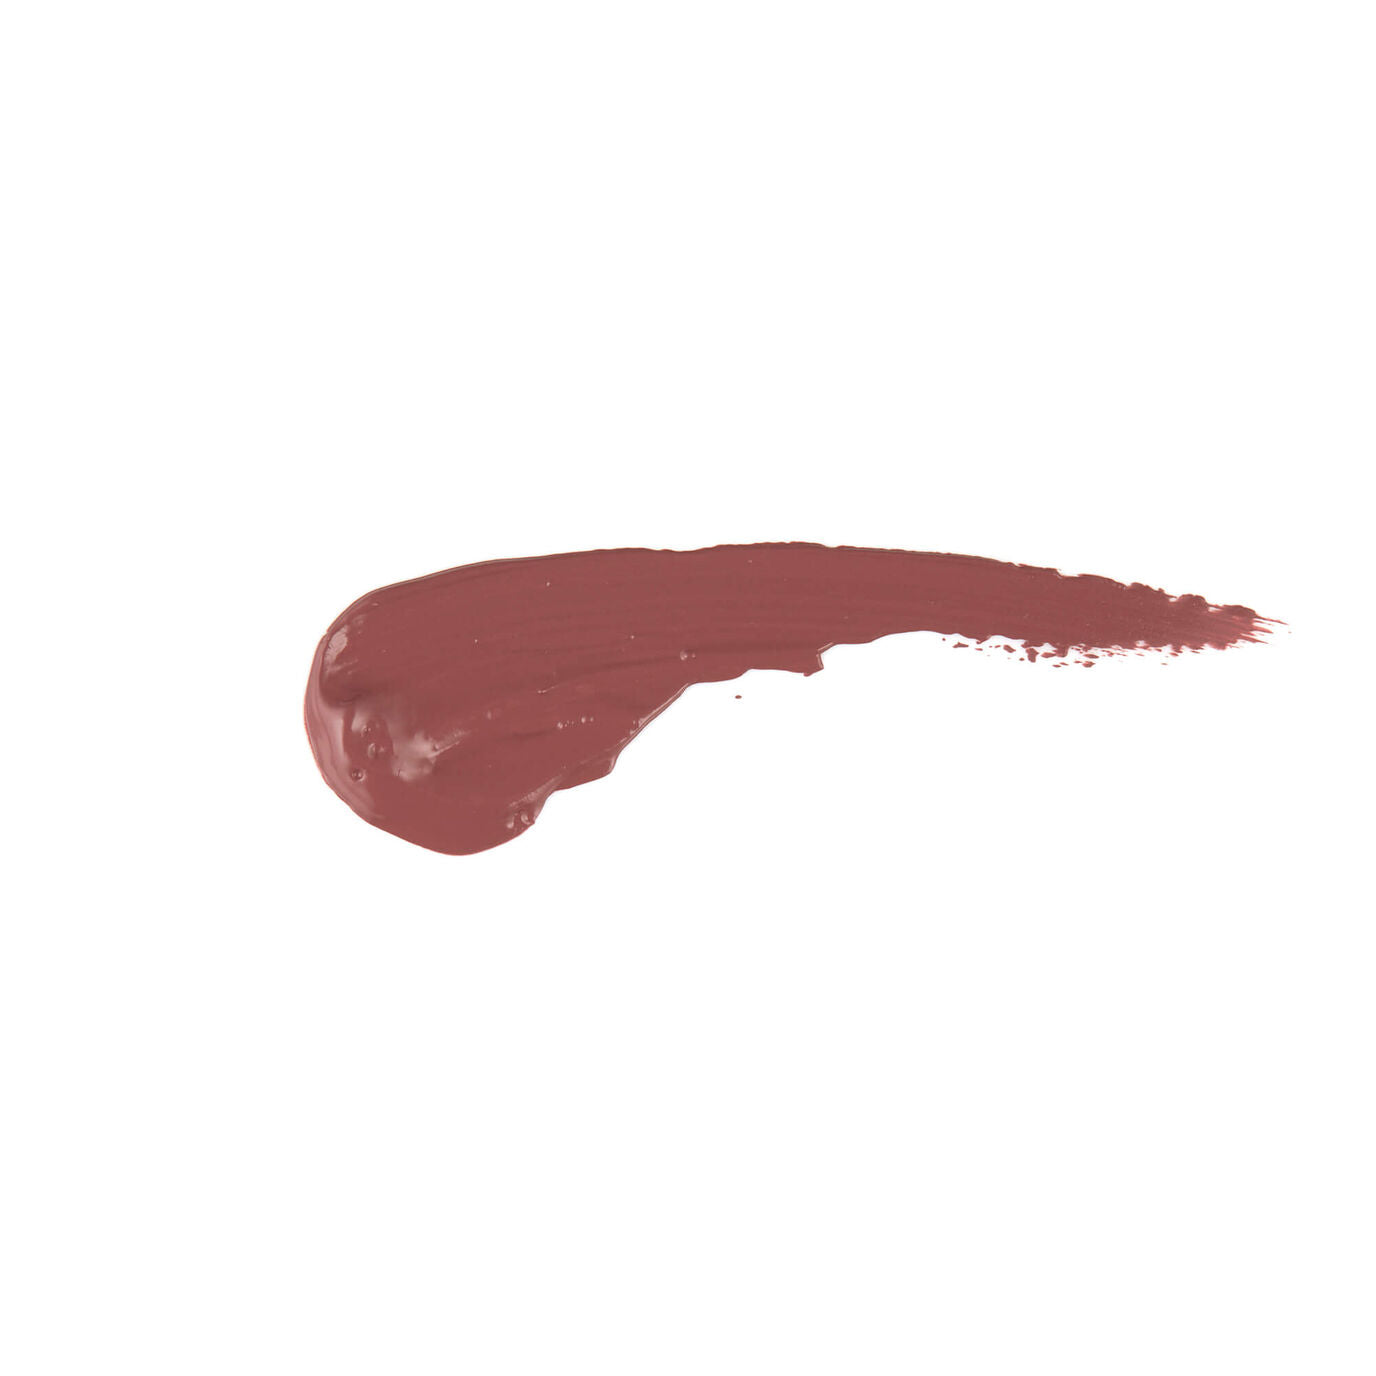 Anastasia Liquid Lipstick